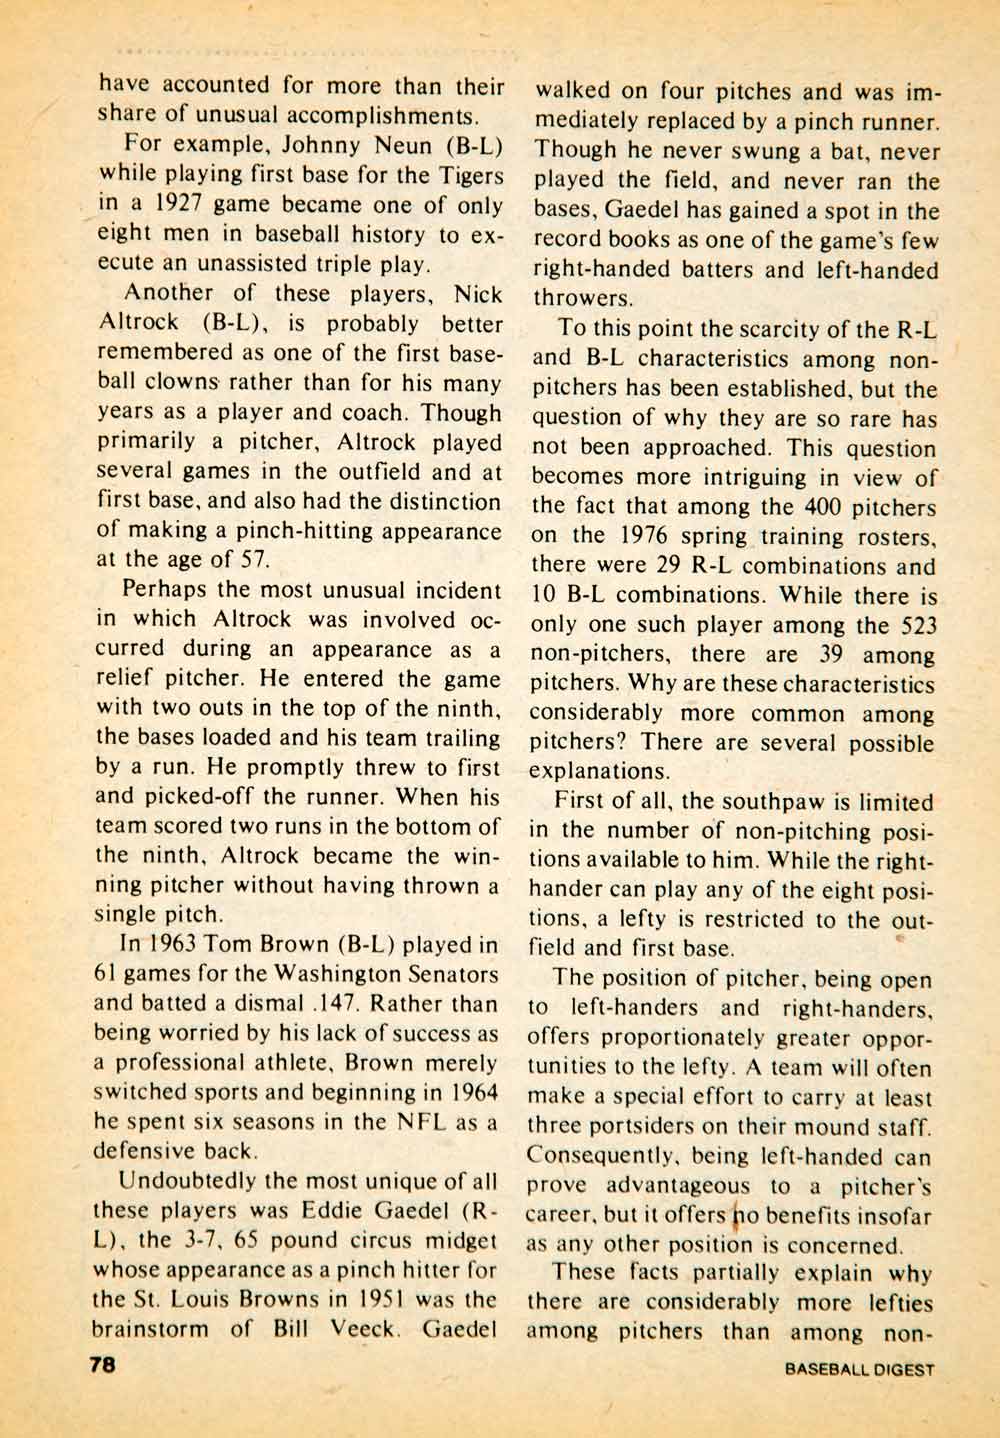 1976 Article MLB Baseball Sports Memorabilia Cleon Jones Chicago White Sox YBD1